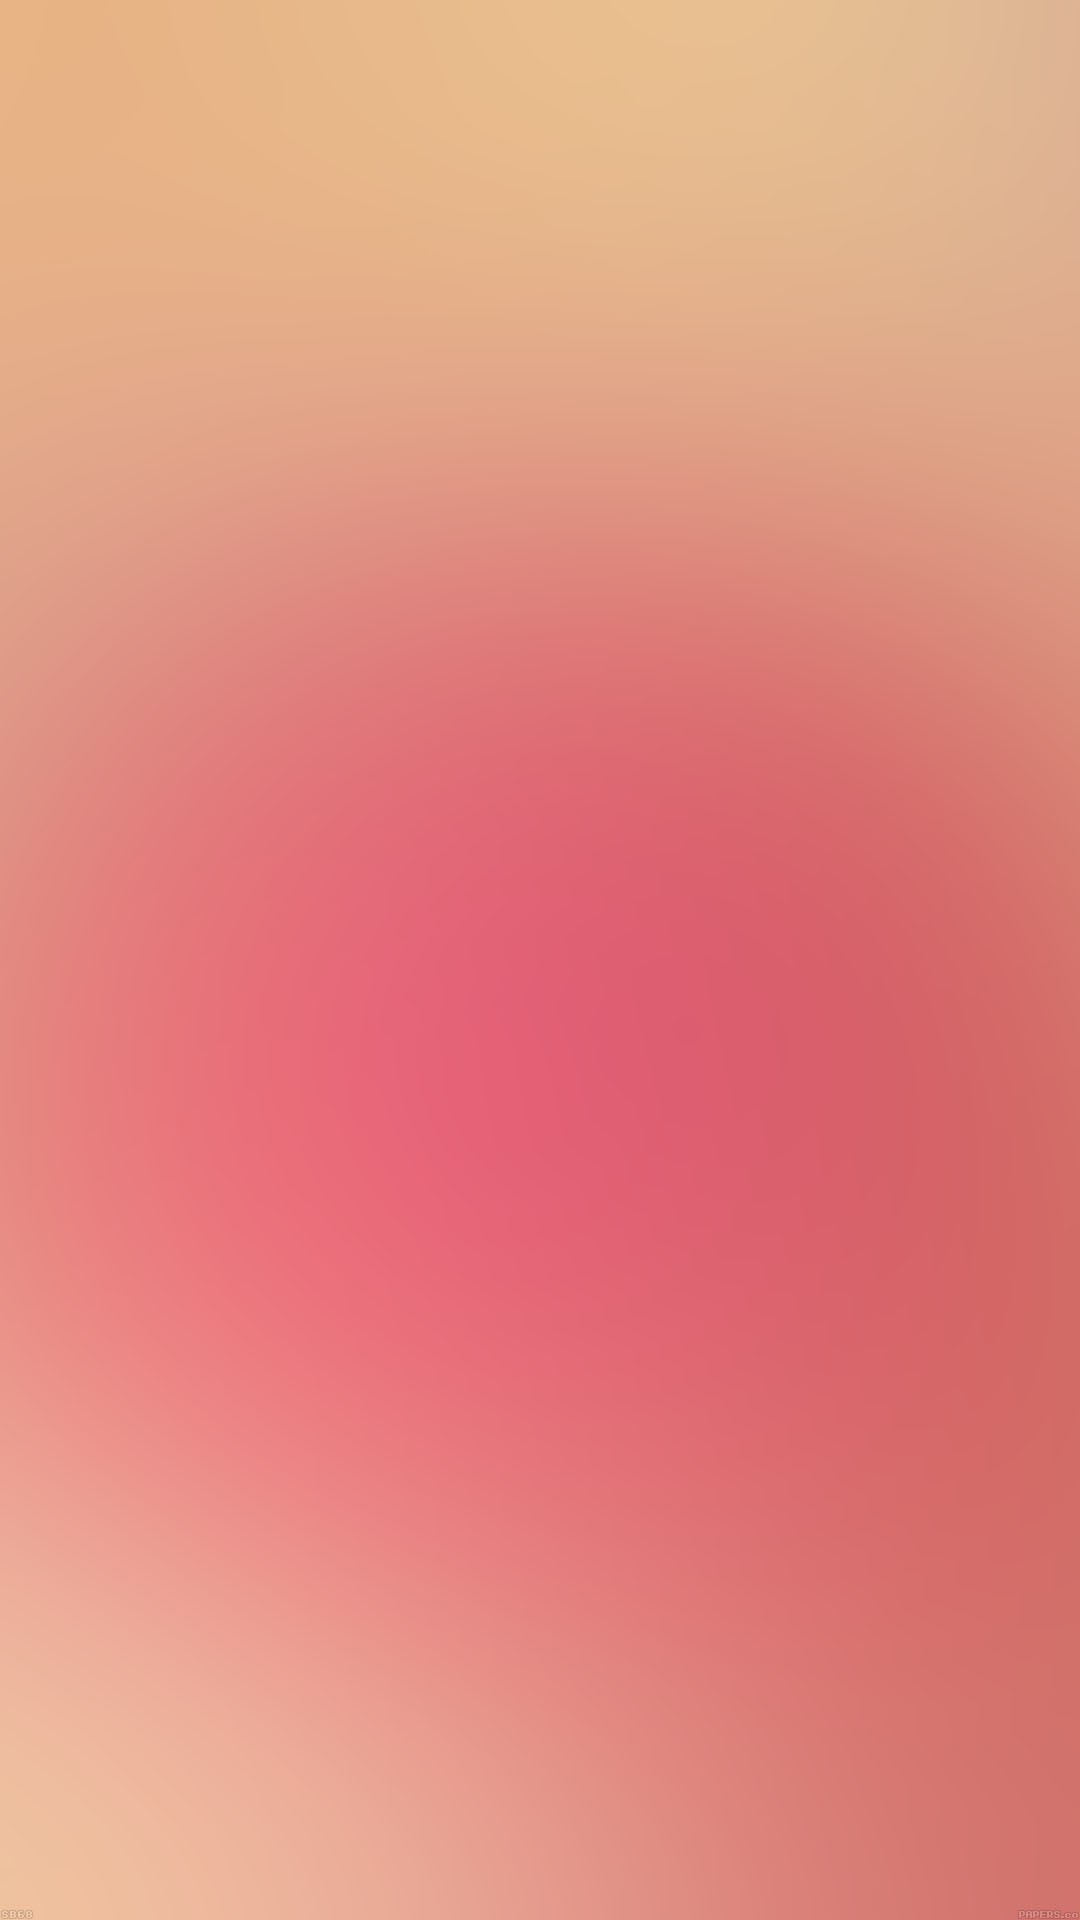 1080x1920 wallpaper pink love blur iPhone 6 Plus Wallpapers - blur rules iPhone 6  Plus Wallpapers - love: 5 stars! nice iphone 6 plus wallpapers to express  your best ...